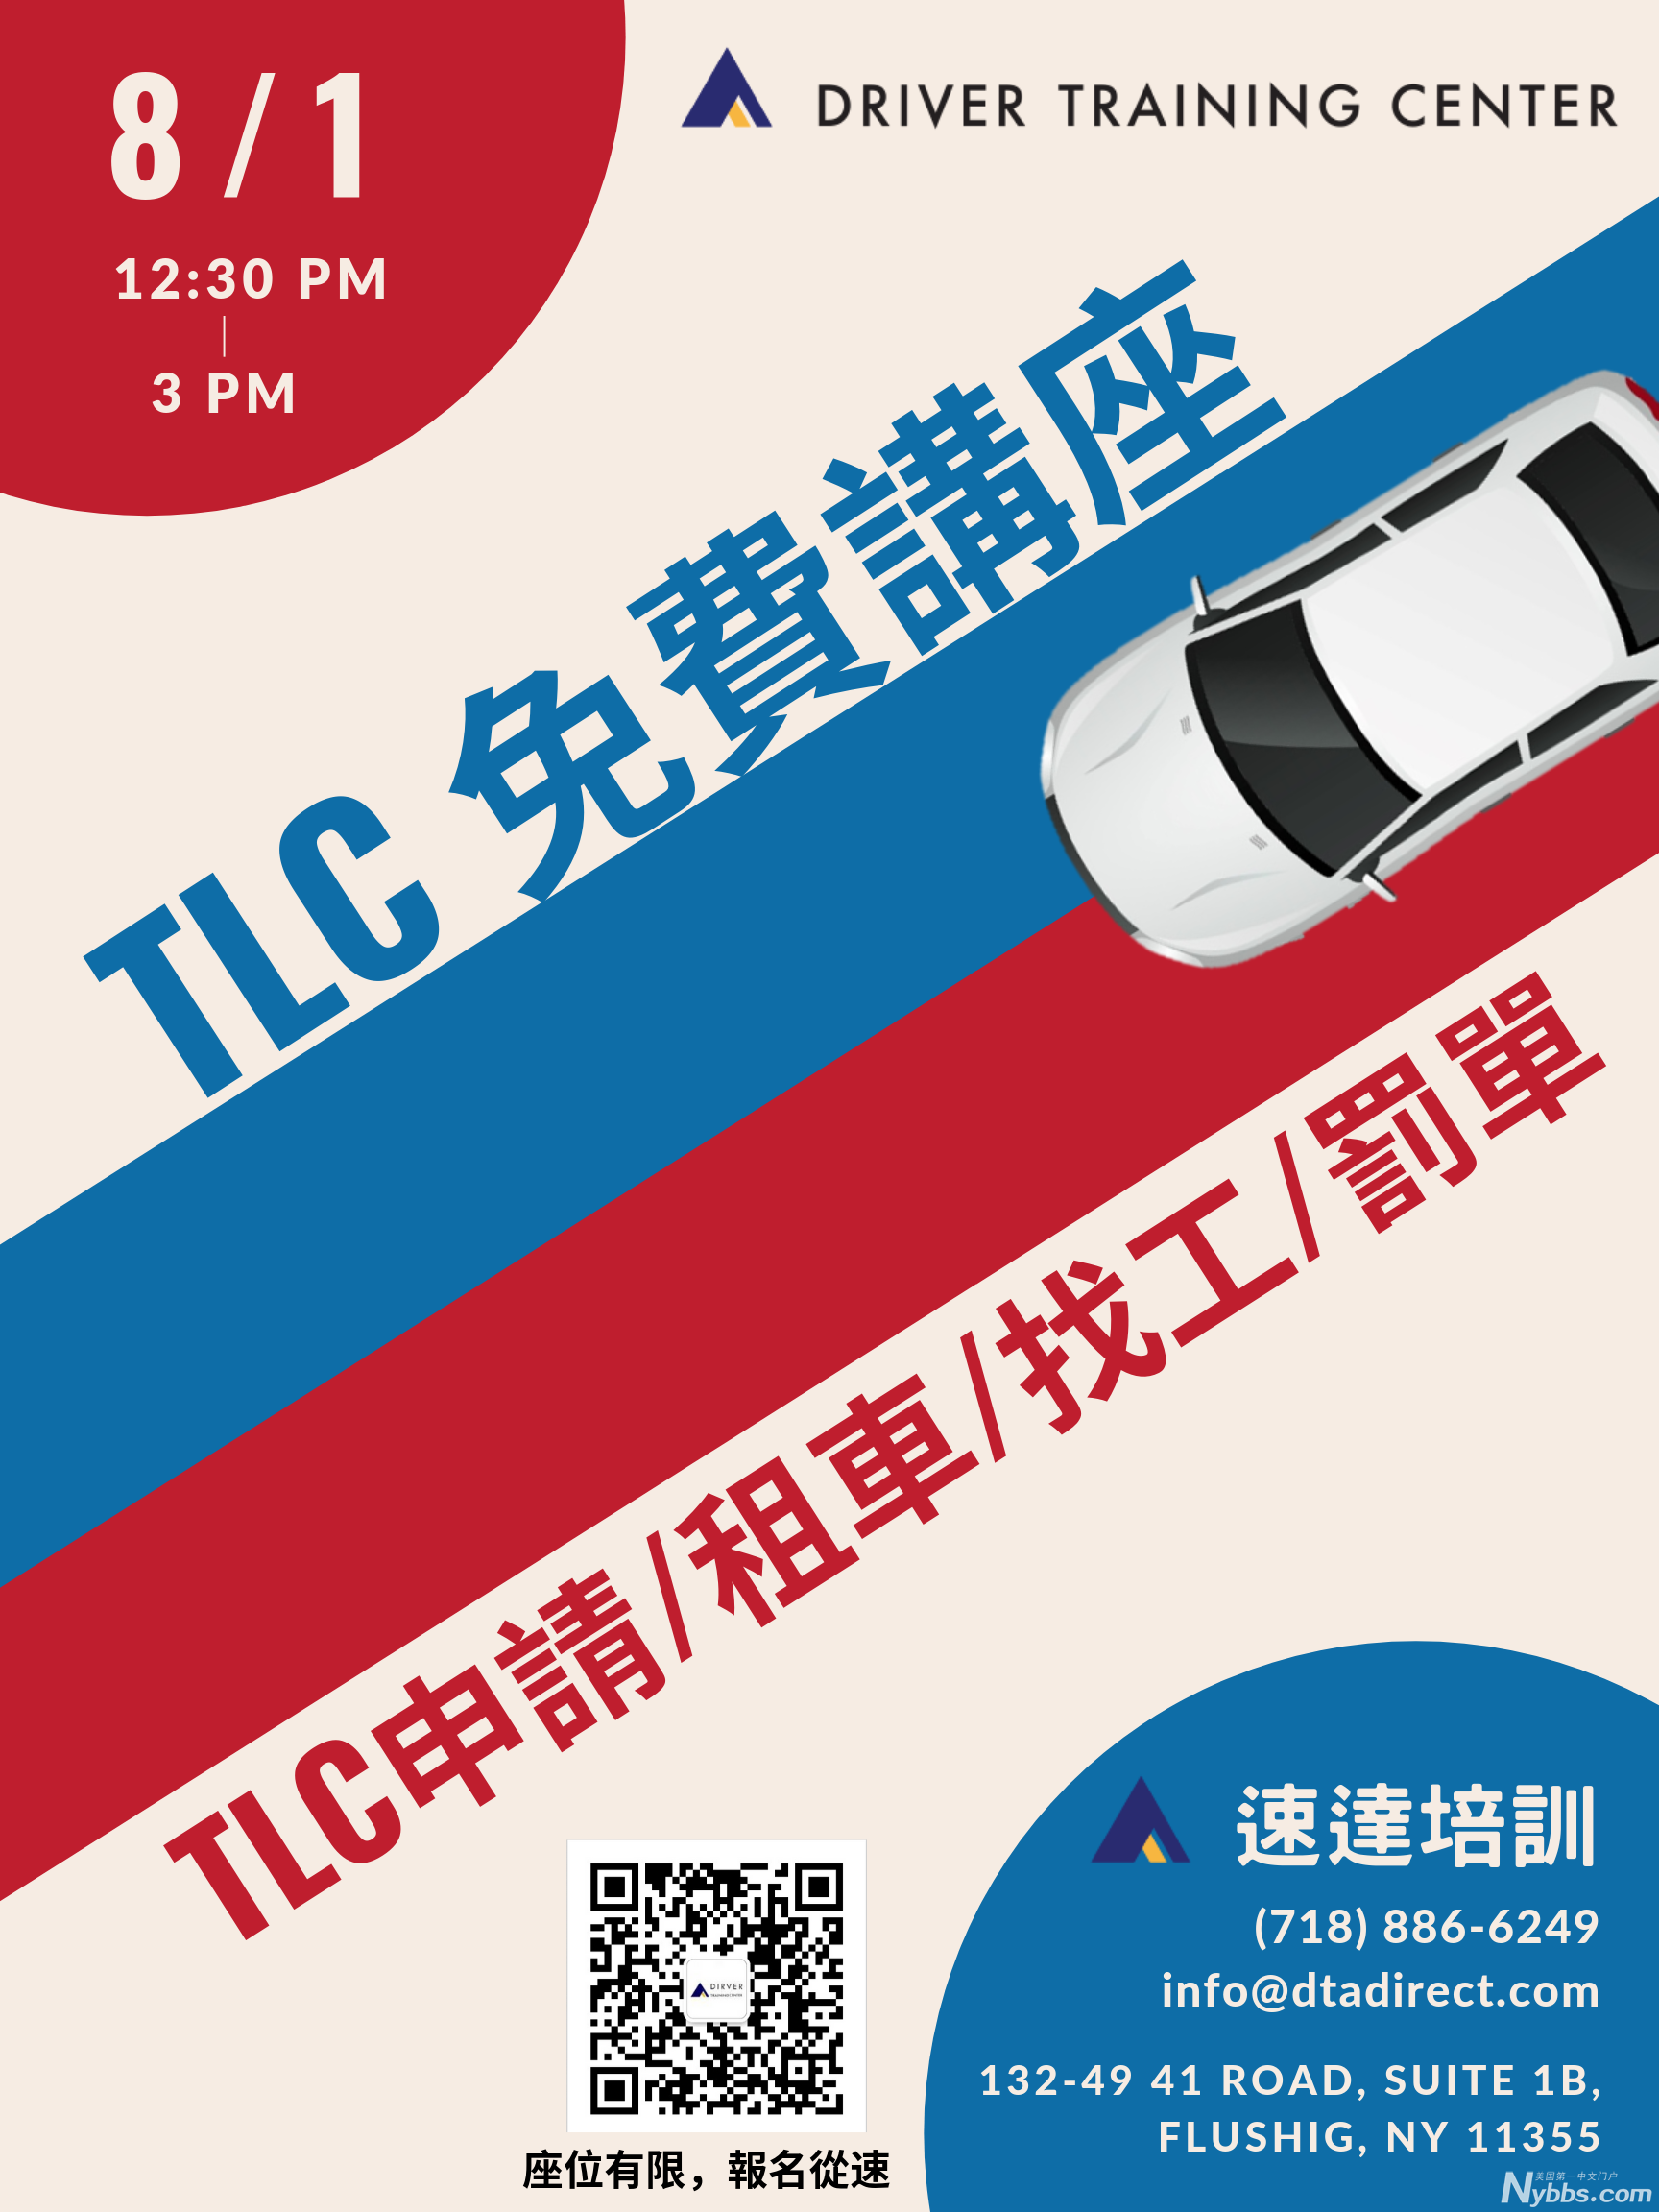 TLC Seminar 0801-CHI V3.png